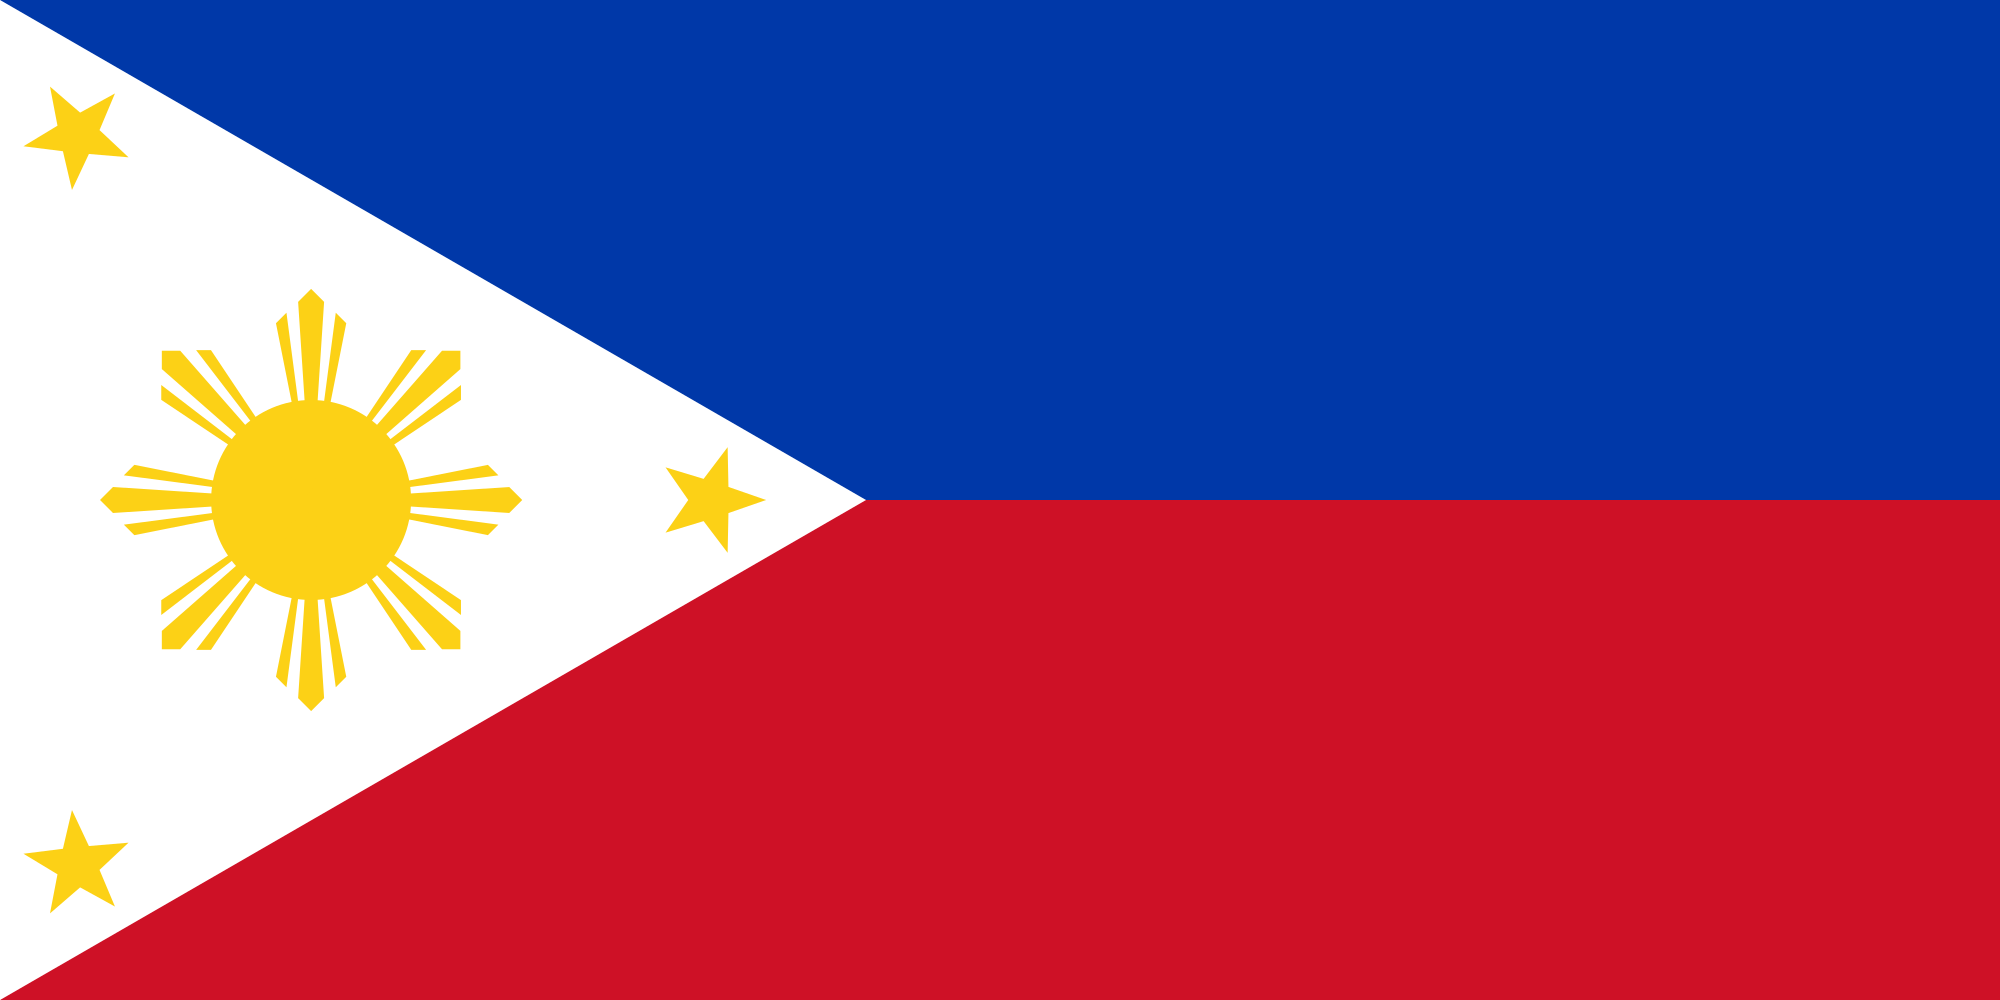  کشور فیلیپین